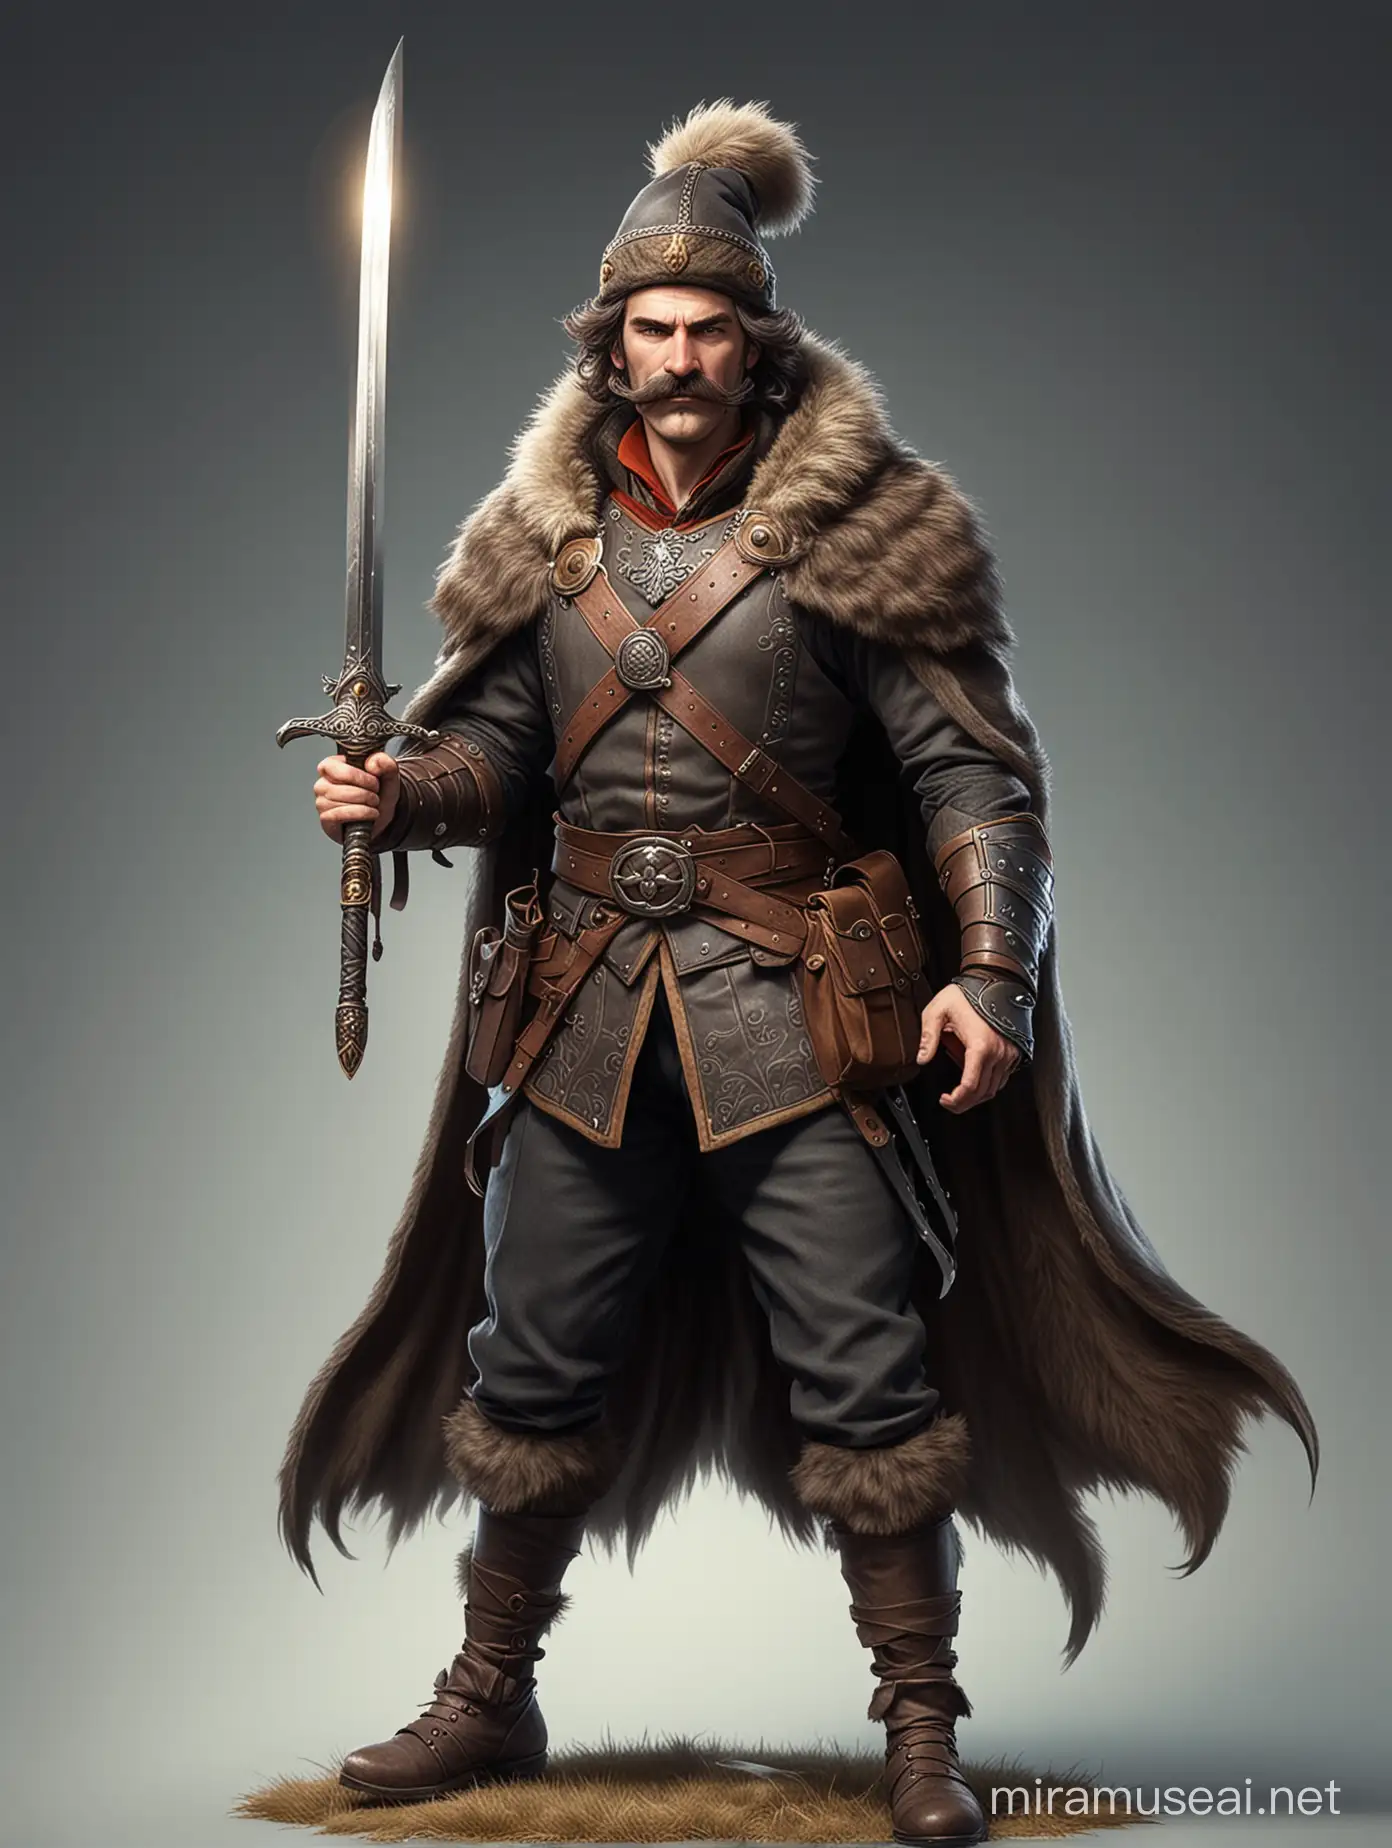 Fierce Nobleman with Mustache and Fur Hat Brandishing Sword